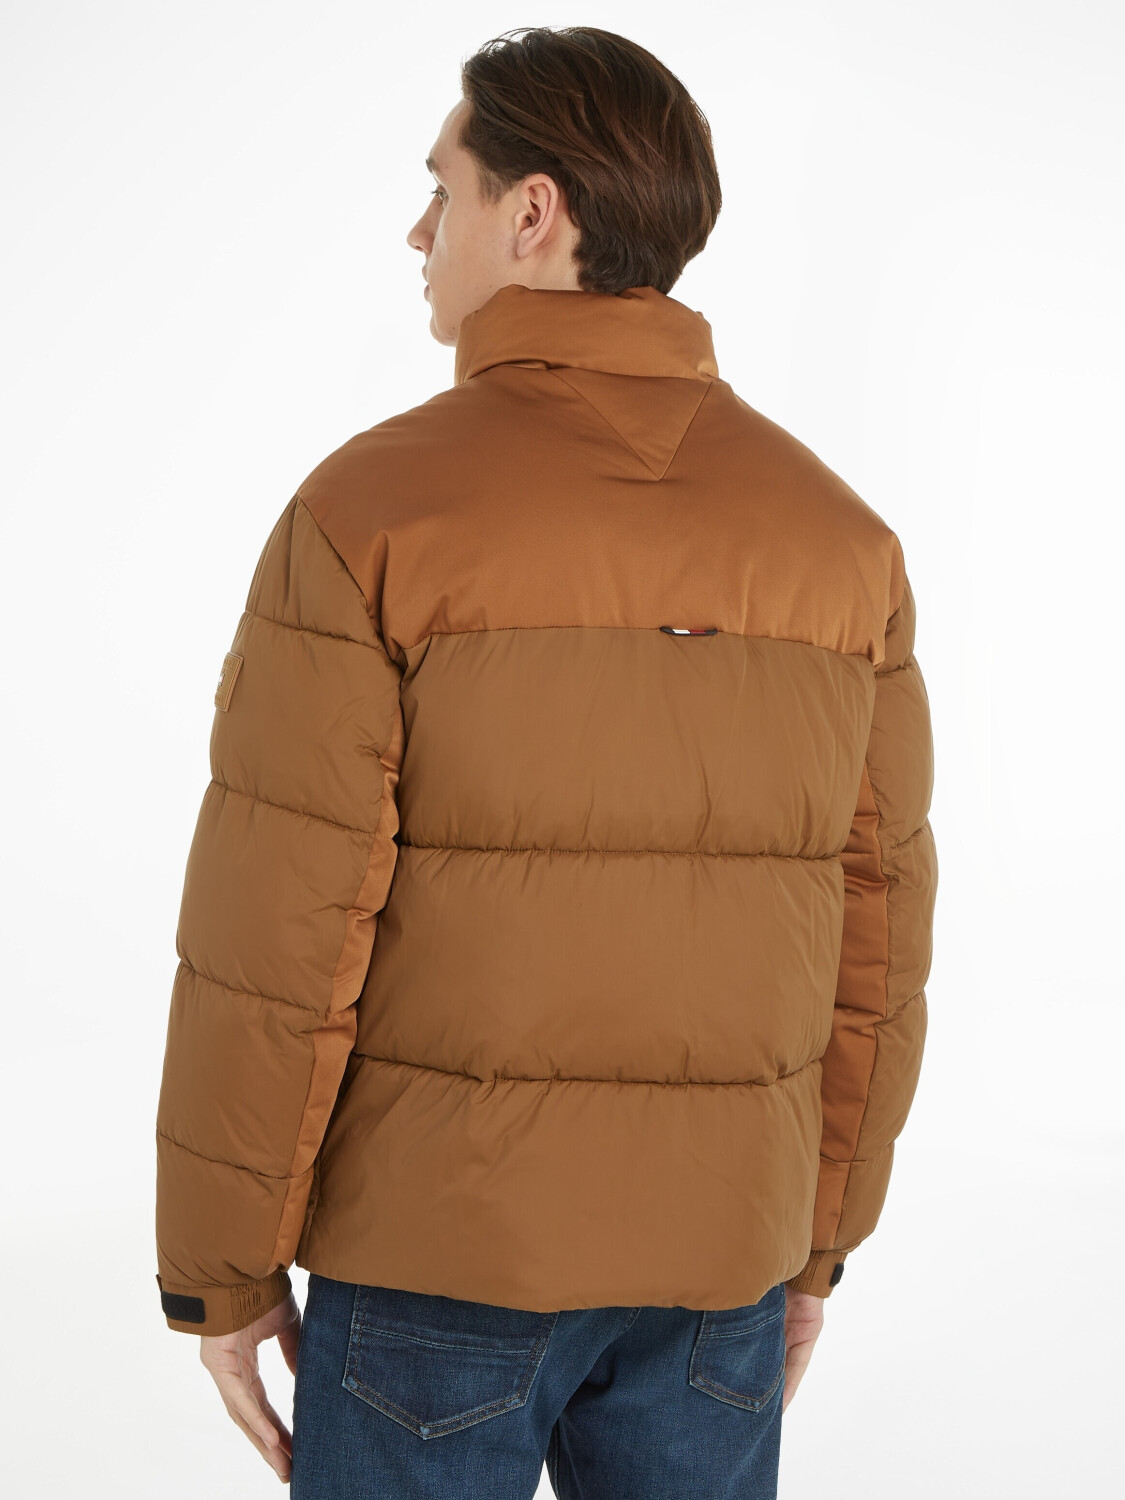 Tommy Hilfiger (MW0MW32770) € 180,00 khaki | Preisvergleich York New Jacket bei desert Puffer Recycled TH ab Warm